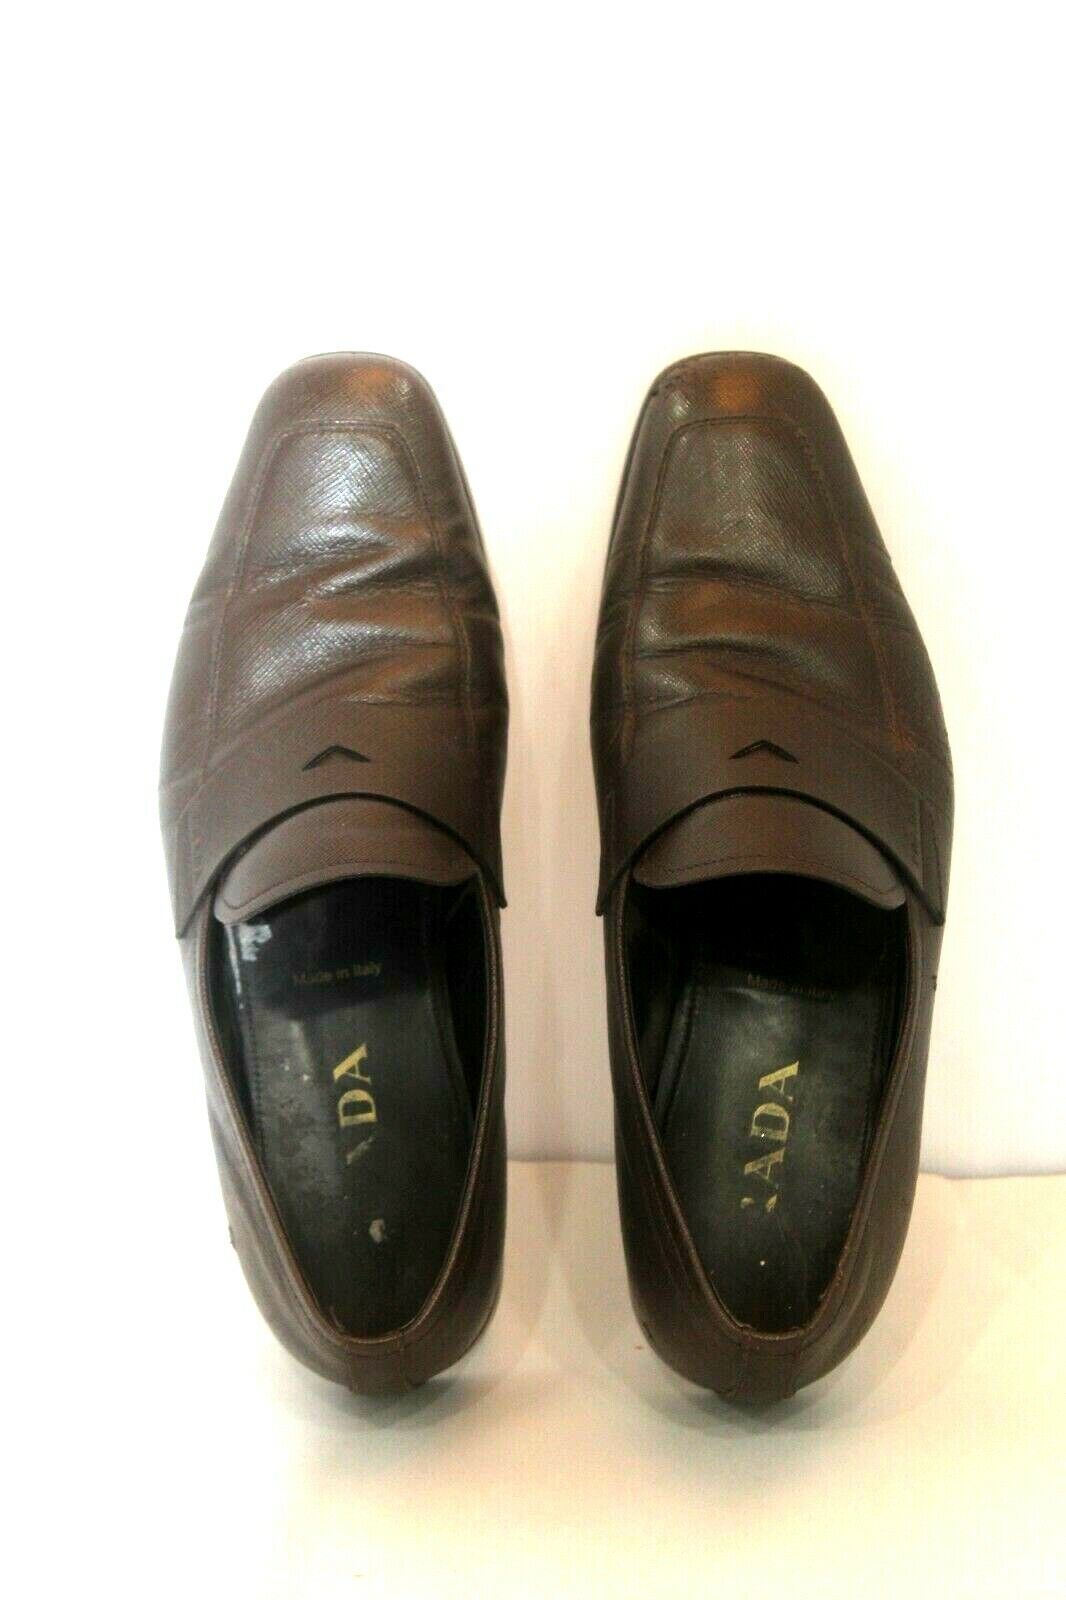 PRADA CALZATURE UOMO 2DC127 Chocolate Brown Shoes Men’s Size 7.5